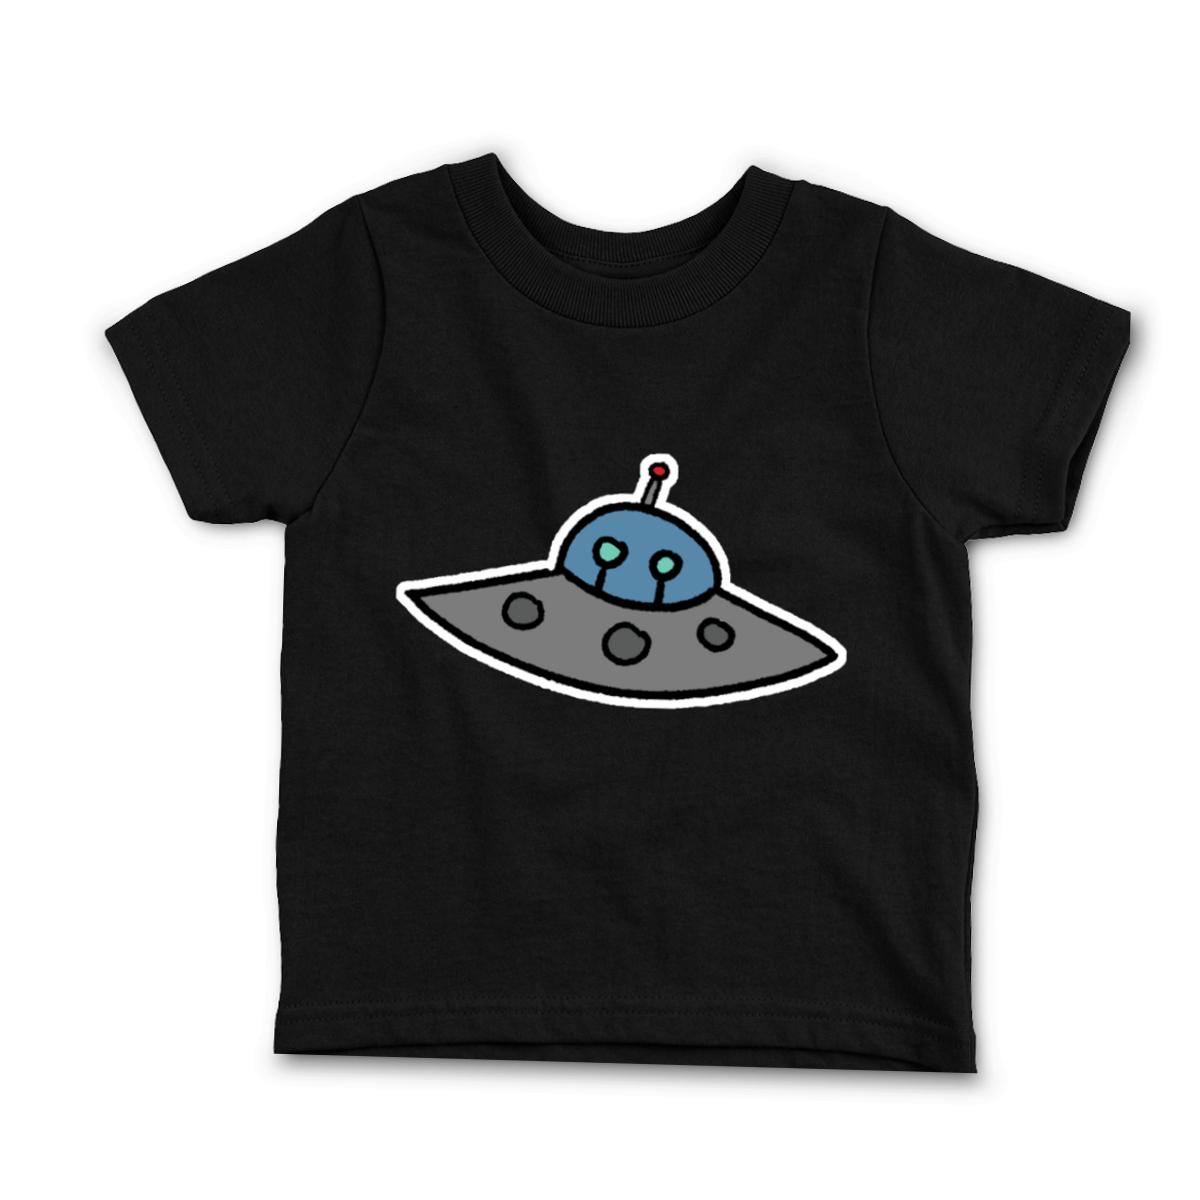 Flying Saucer Toddler Tee 4T black